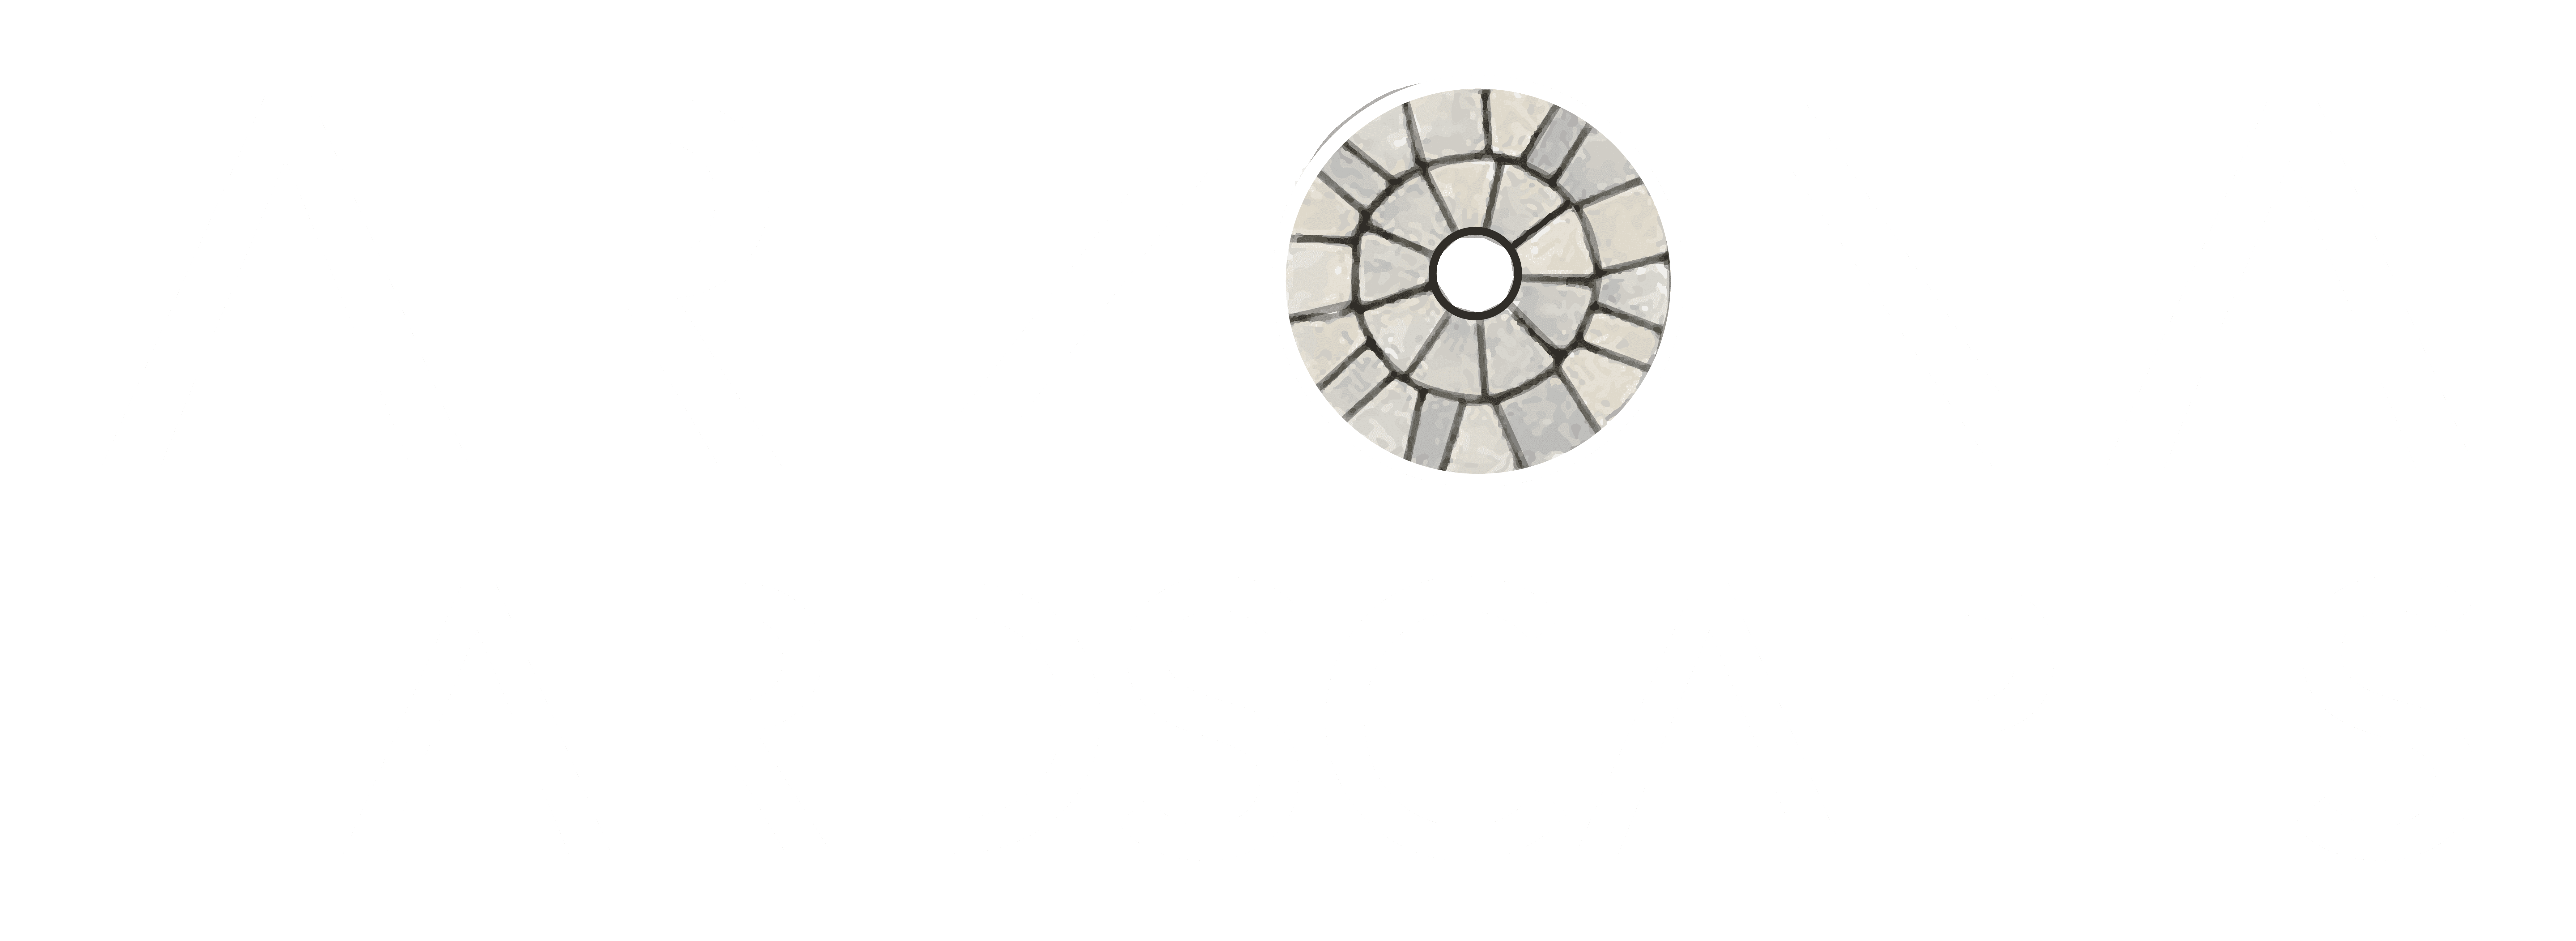 Arizona Hardscapes Logo Light Version